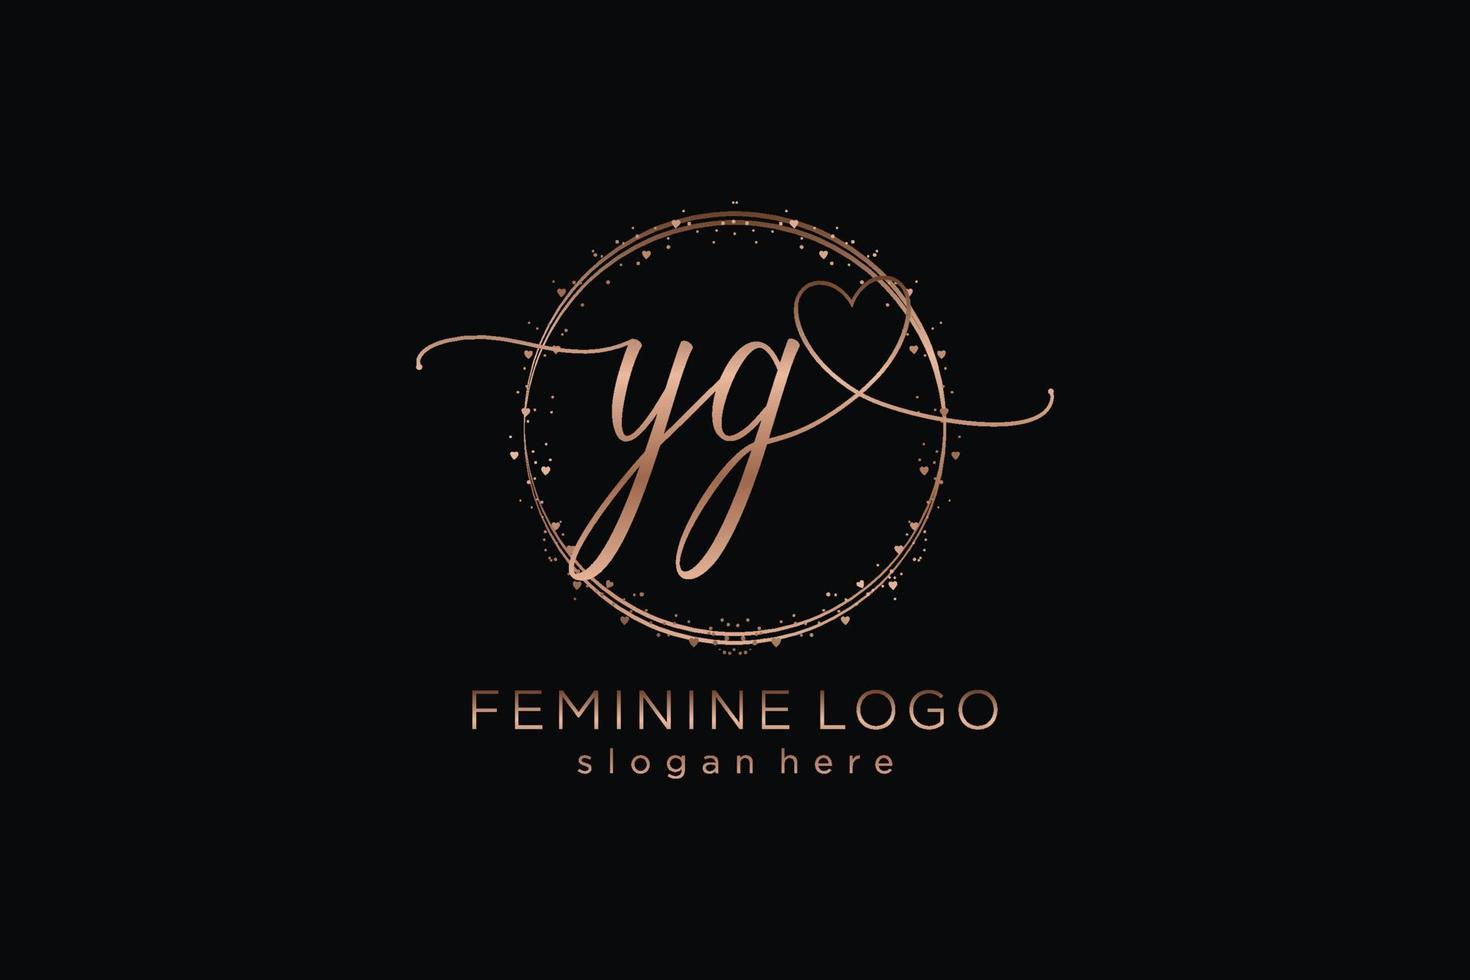 logotipo inicial de escritura a mano yg con plantilla de círculo logotipo vectorial de boda inicial, moda, floral y botánica con plantilla creativa. vector